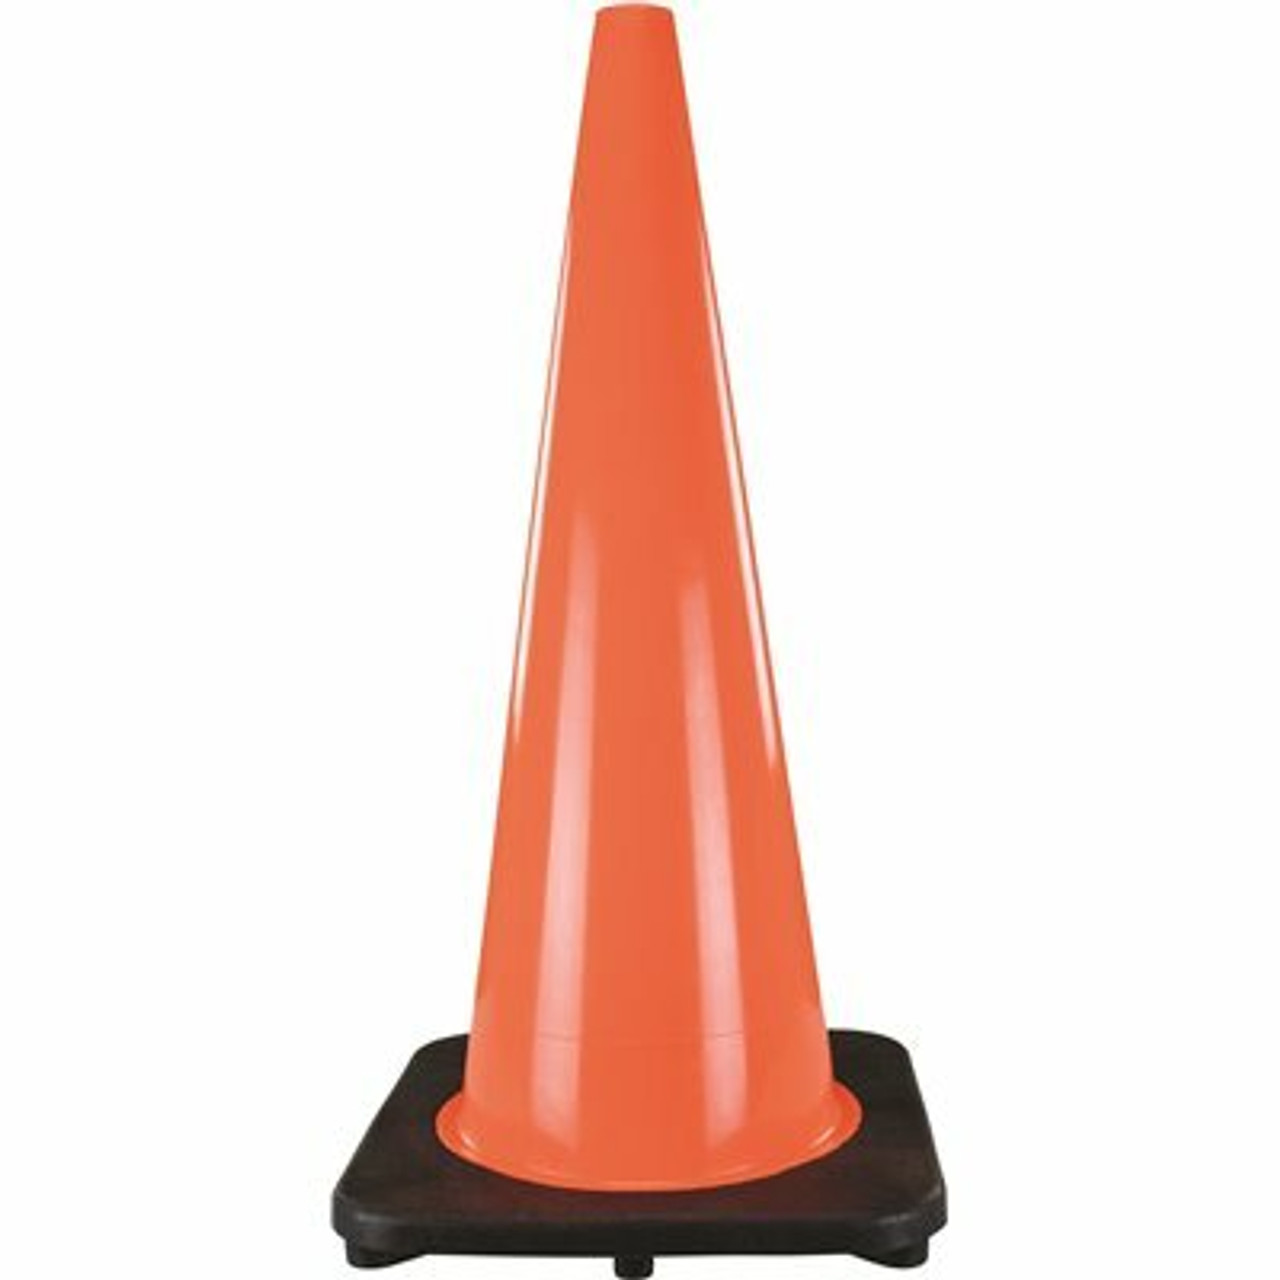 28 In. Orange Pvc Traffic Cone